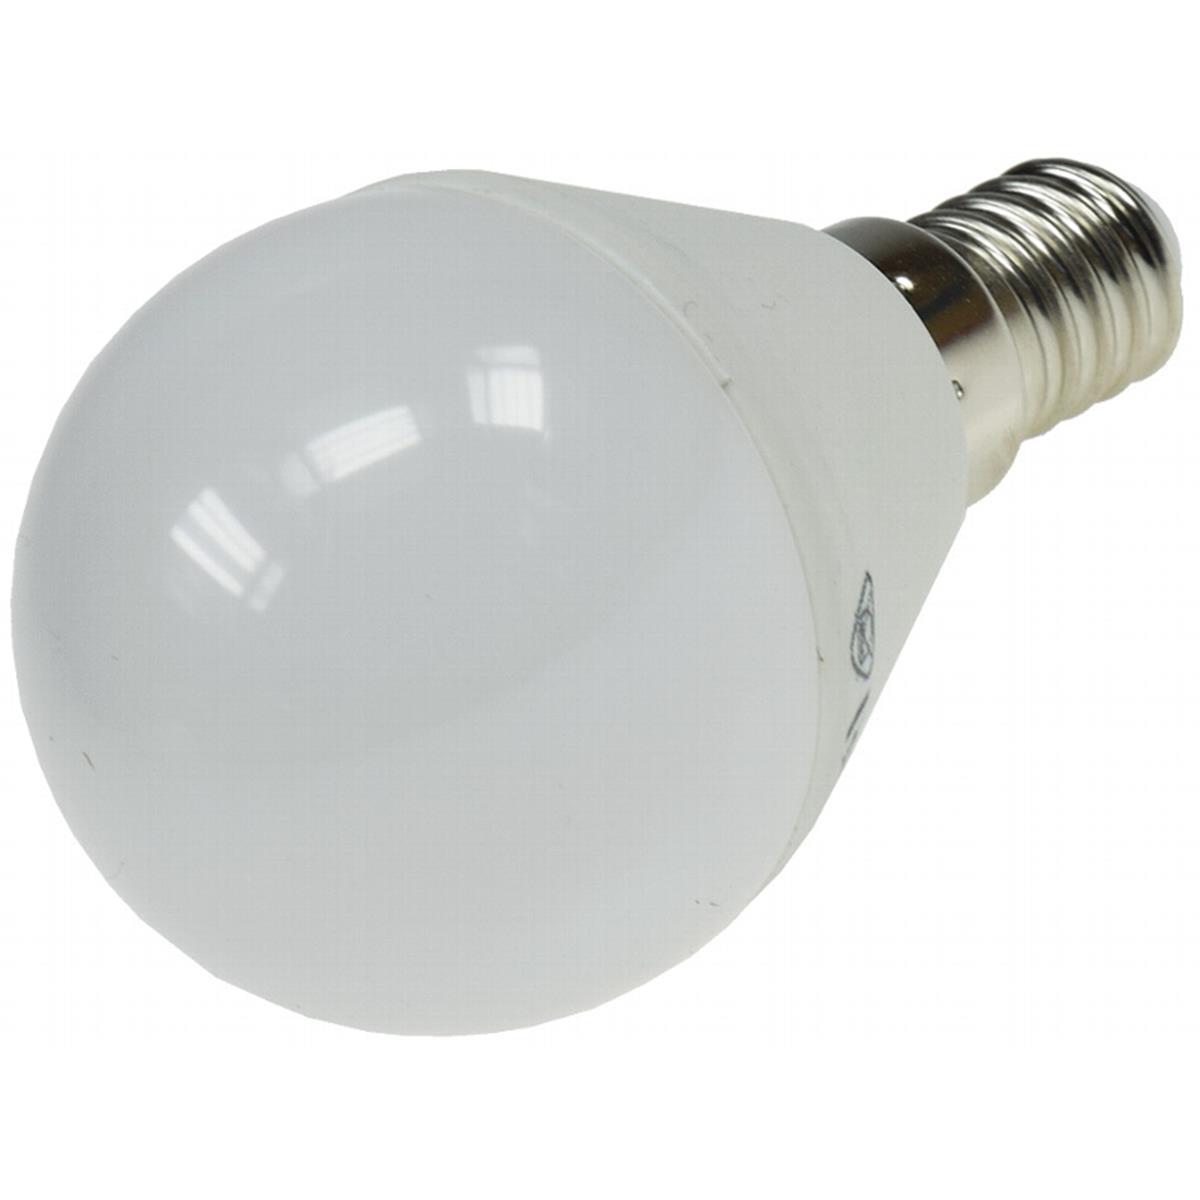 LED Tropfenlampe E14 "T50" weiß 6000k, 420lm, 230V/5W